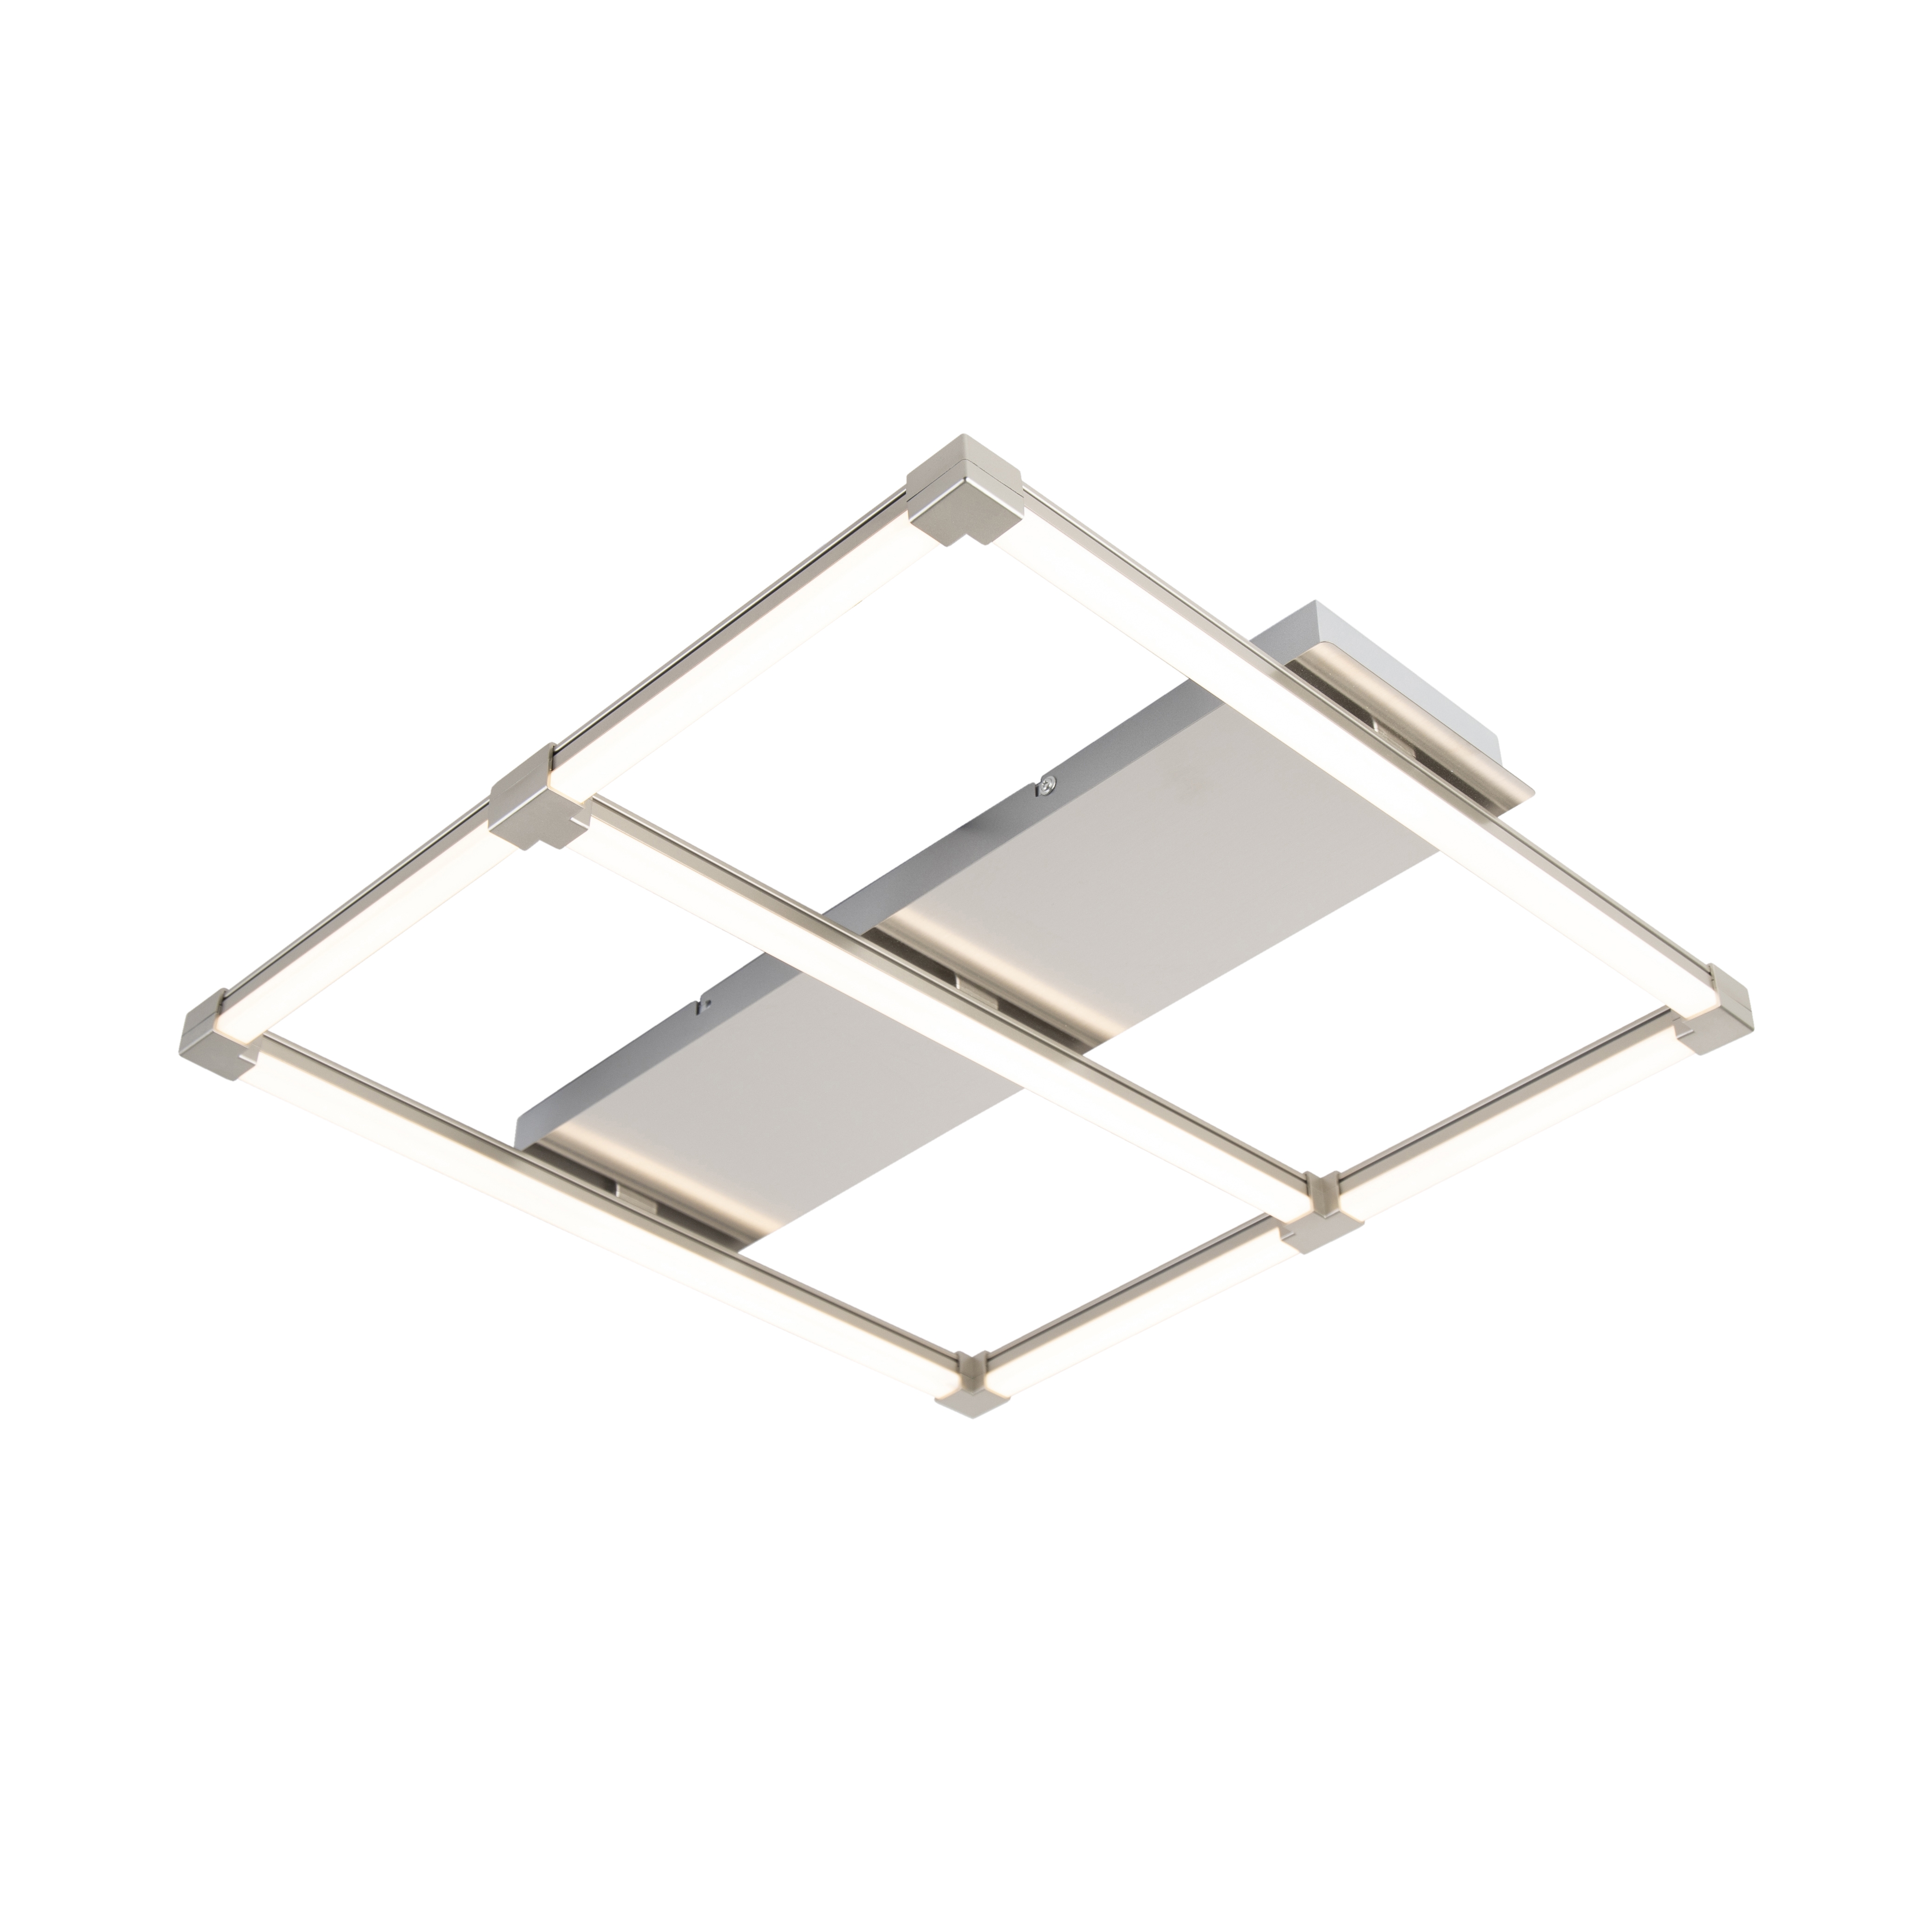 Design vierkante plafondlamp staal incl. LED - Plazas